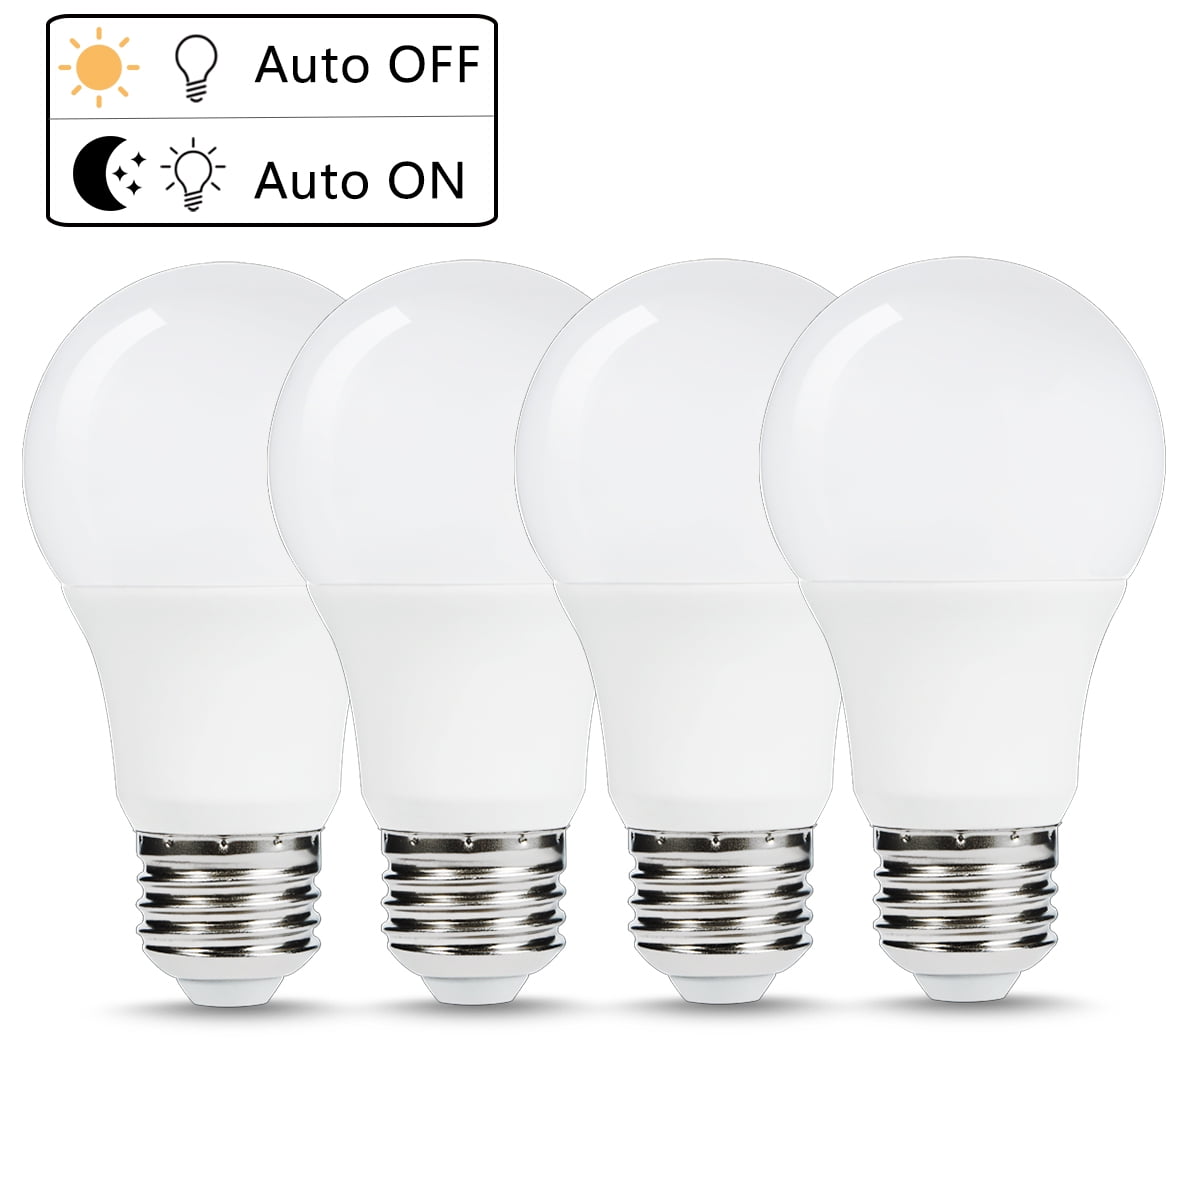 S 5W LED A19 Light Bulb 40W Equivalent Warm White 2800K 500 lumen E26 UL Listed 